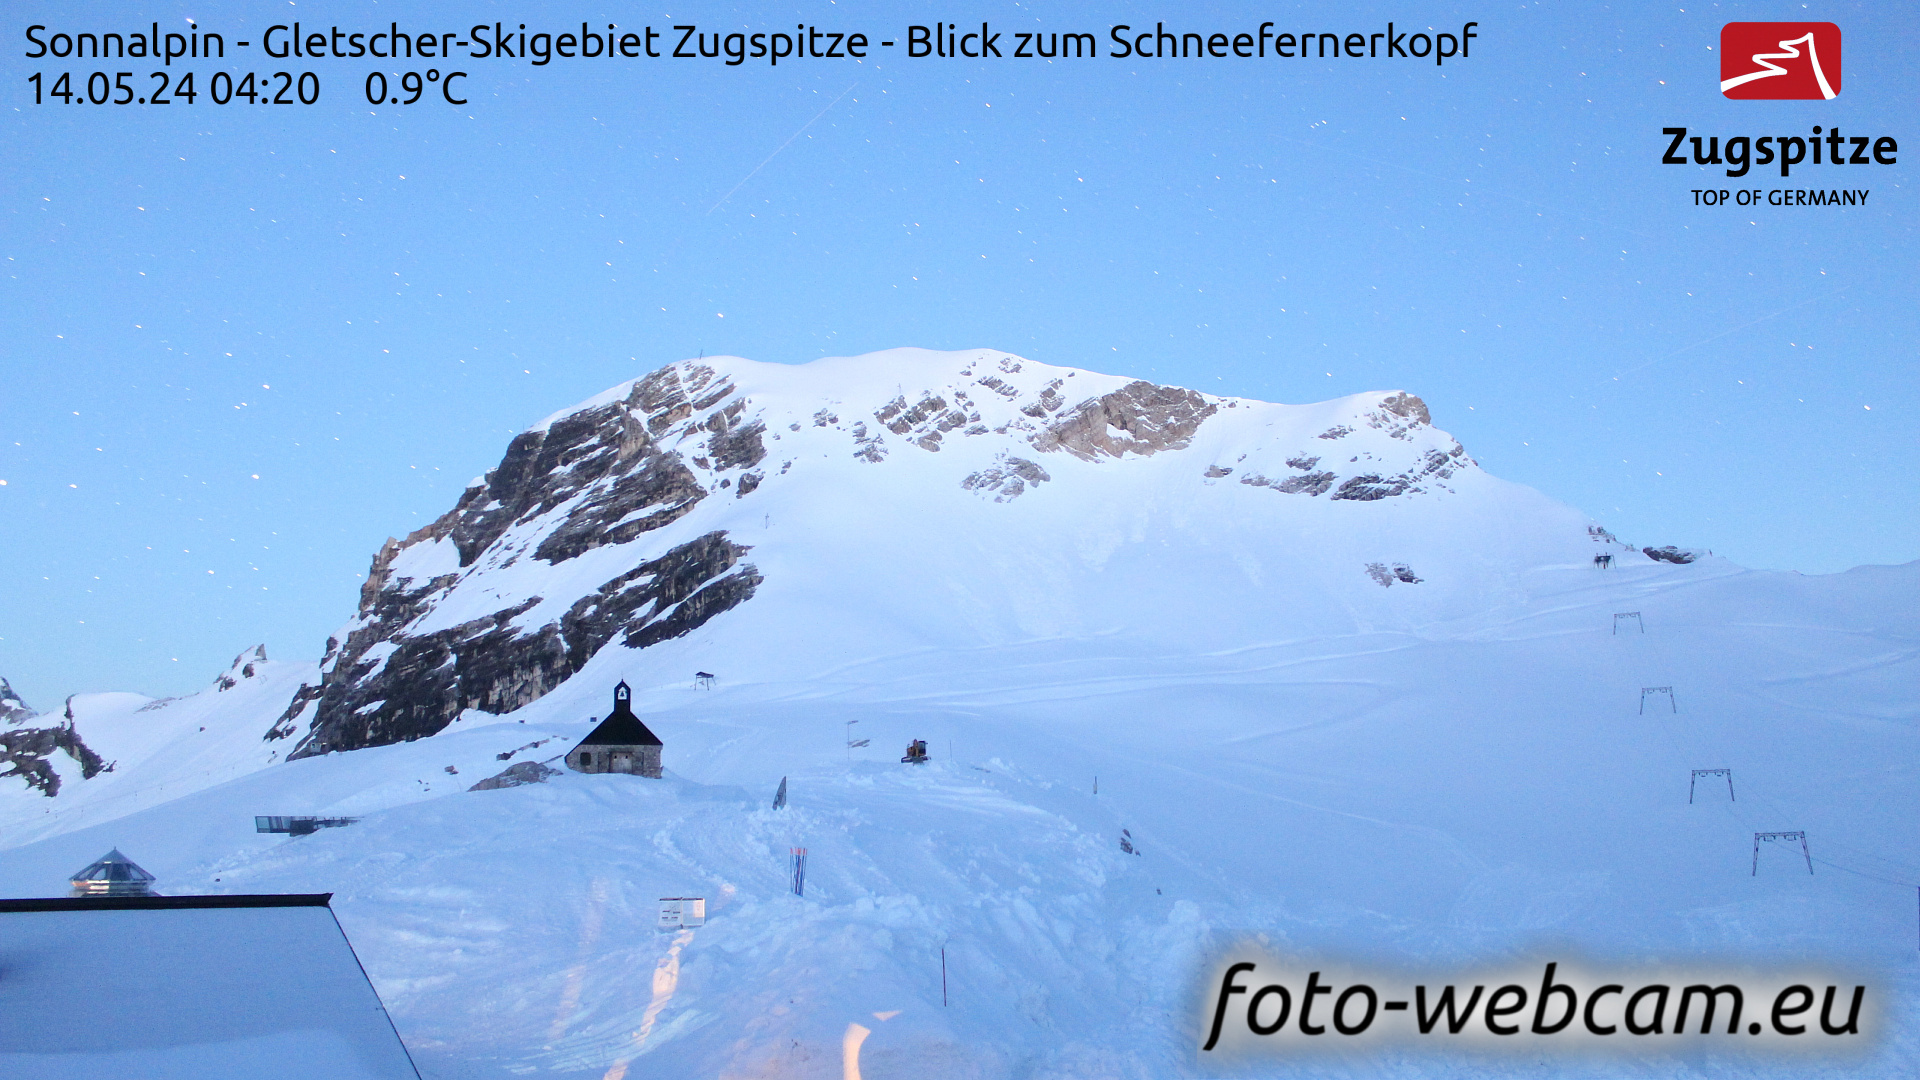 Zugspitze Gio. 04:24